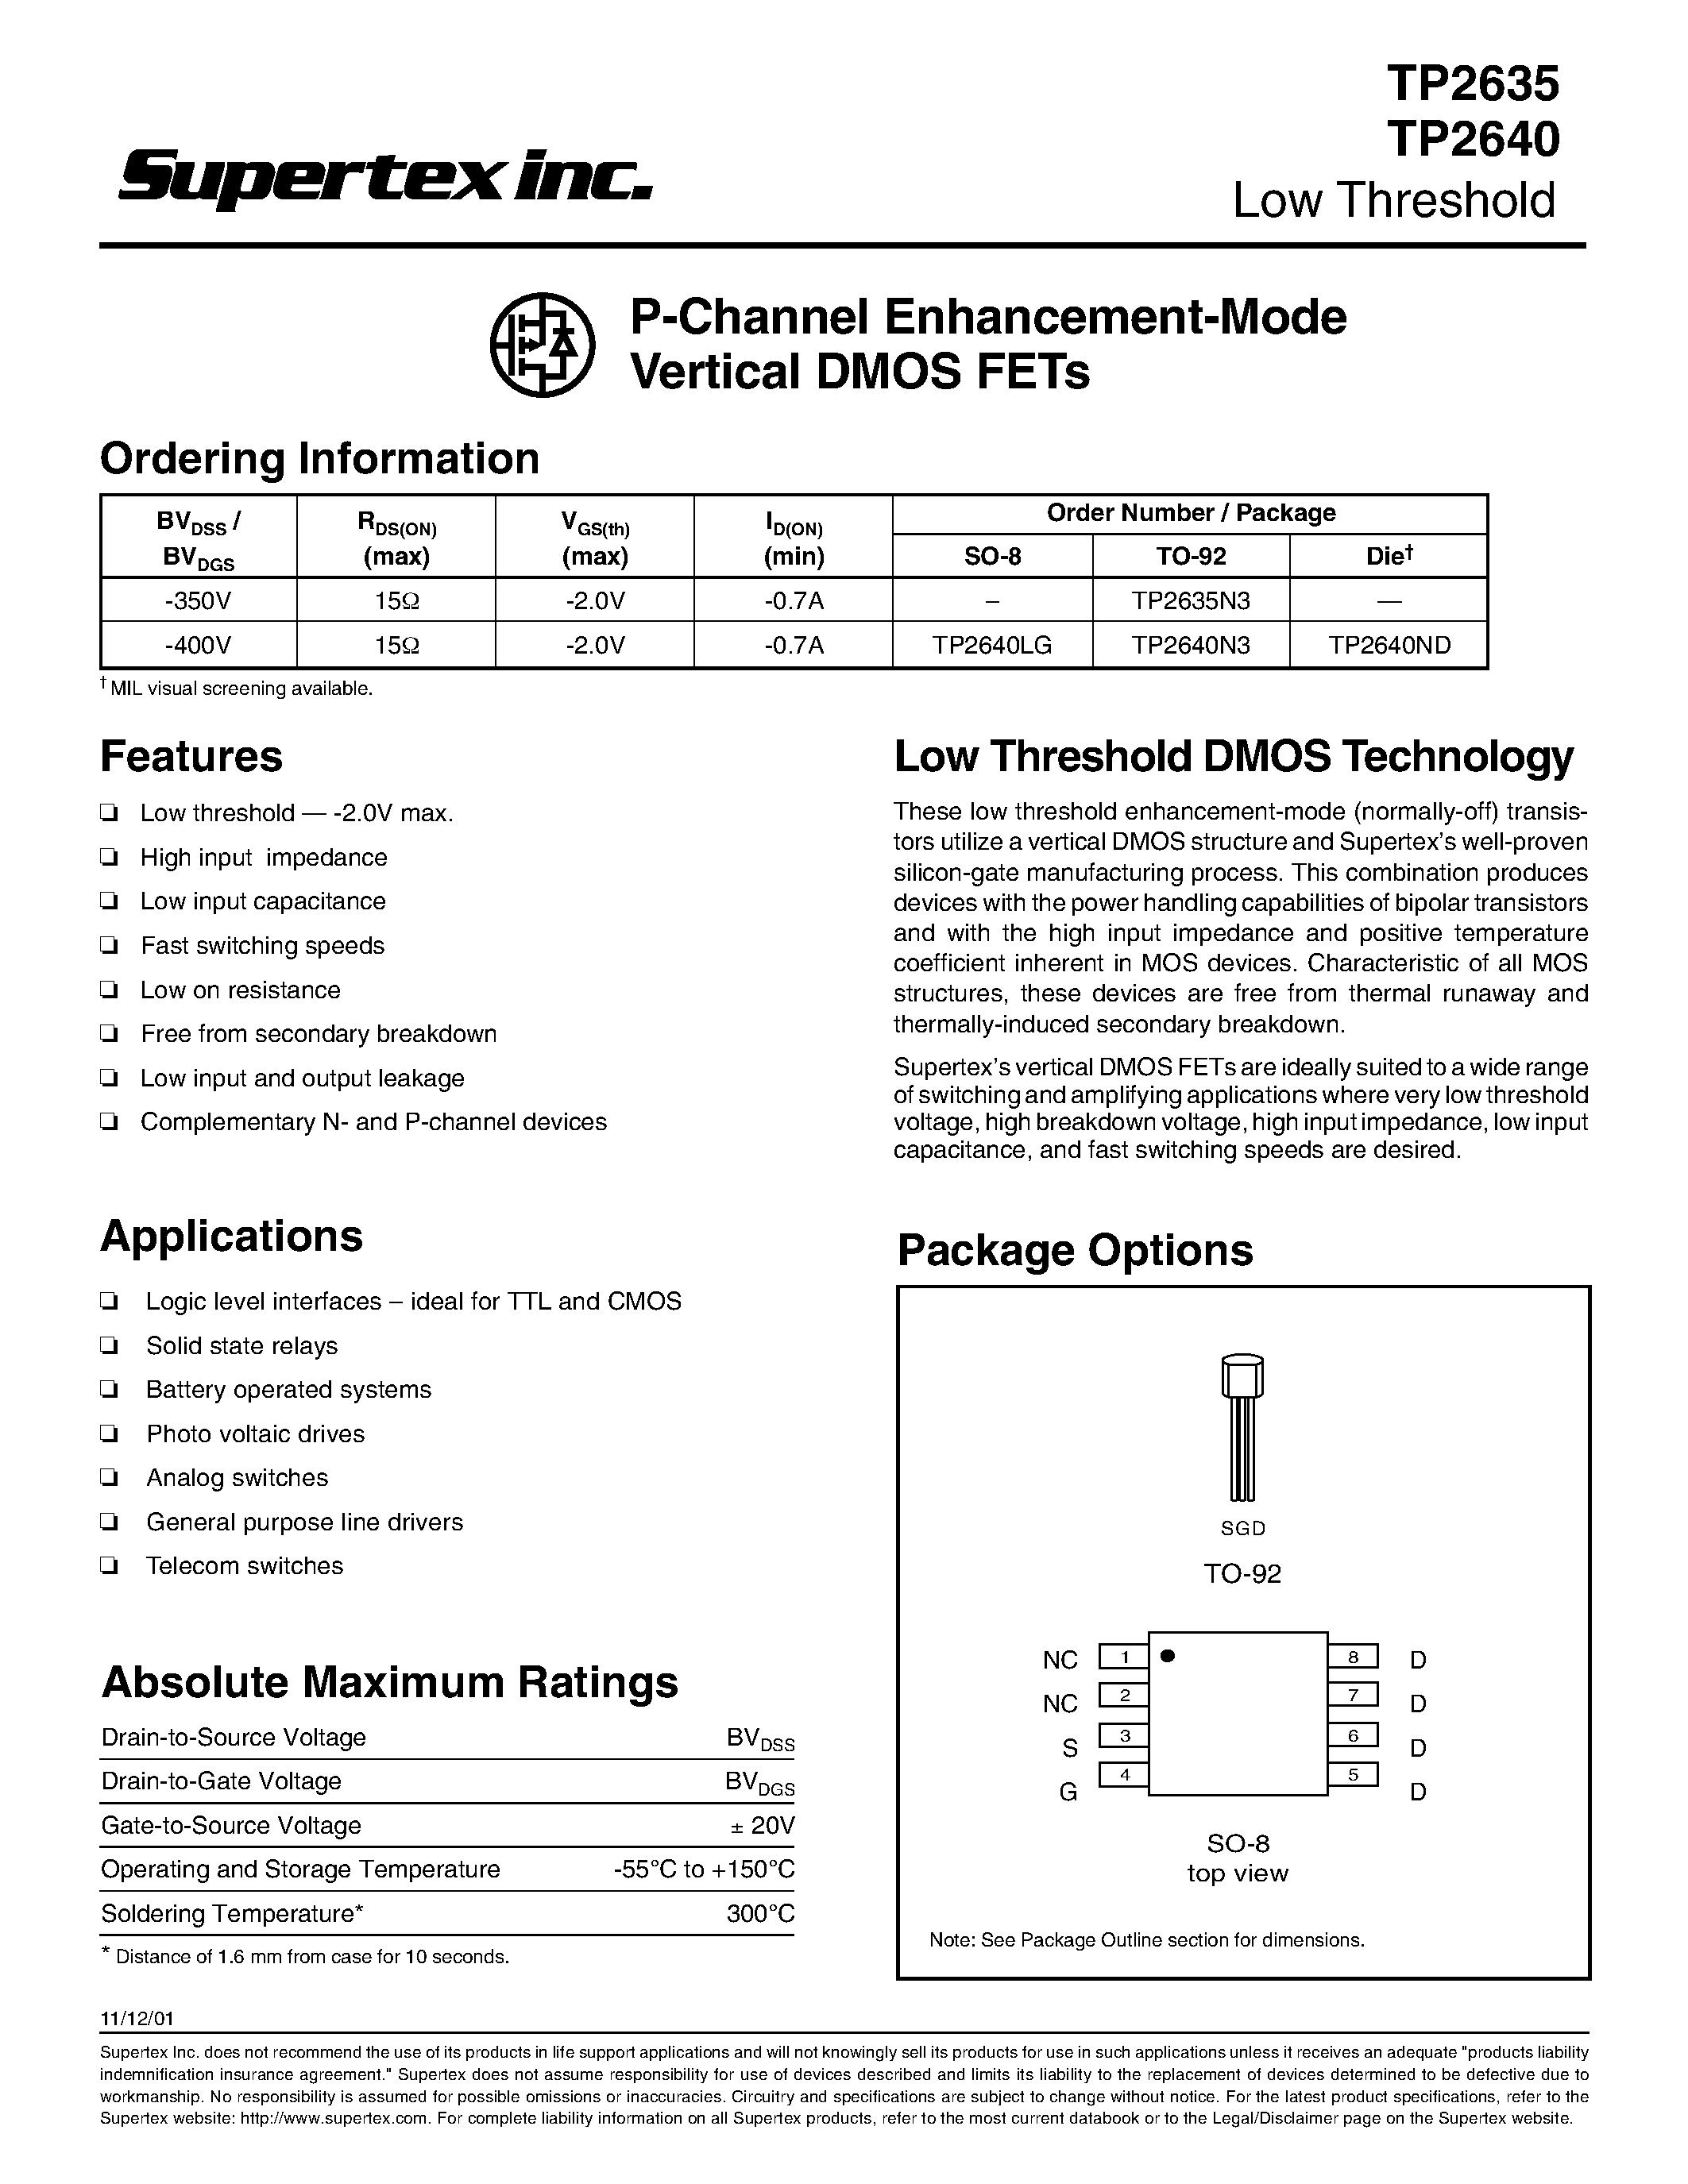 Datasheet TP2640LG - P-Channel Enhancement-Mode Vertical DMOS FETs page 1